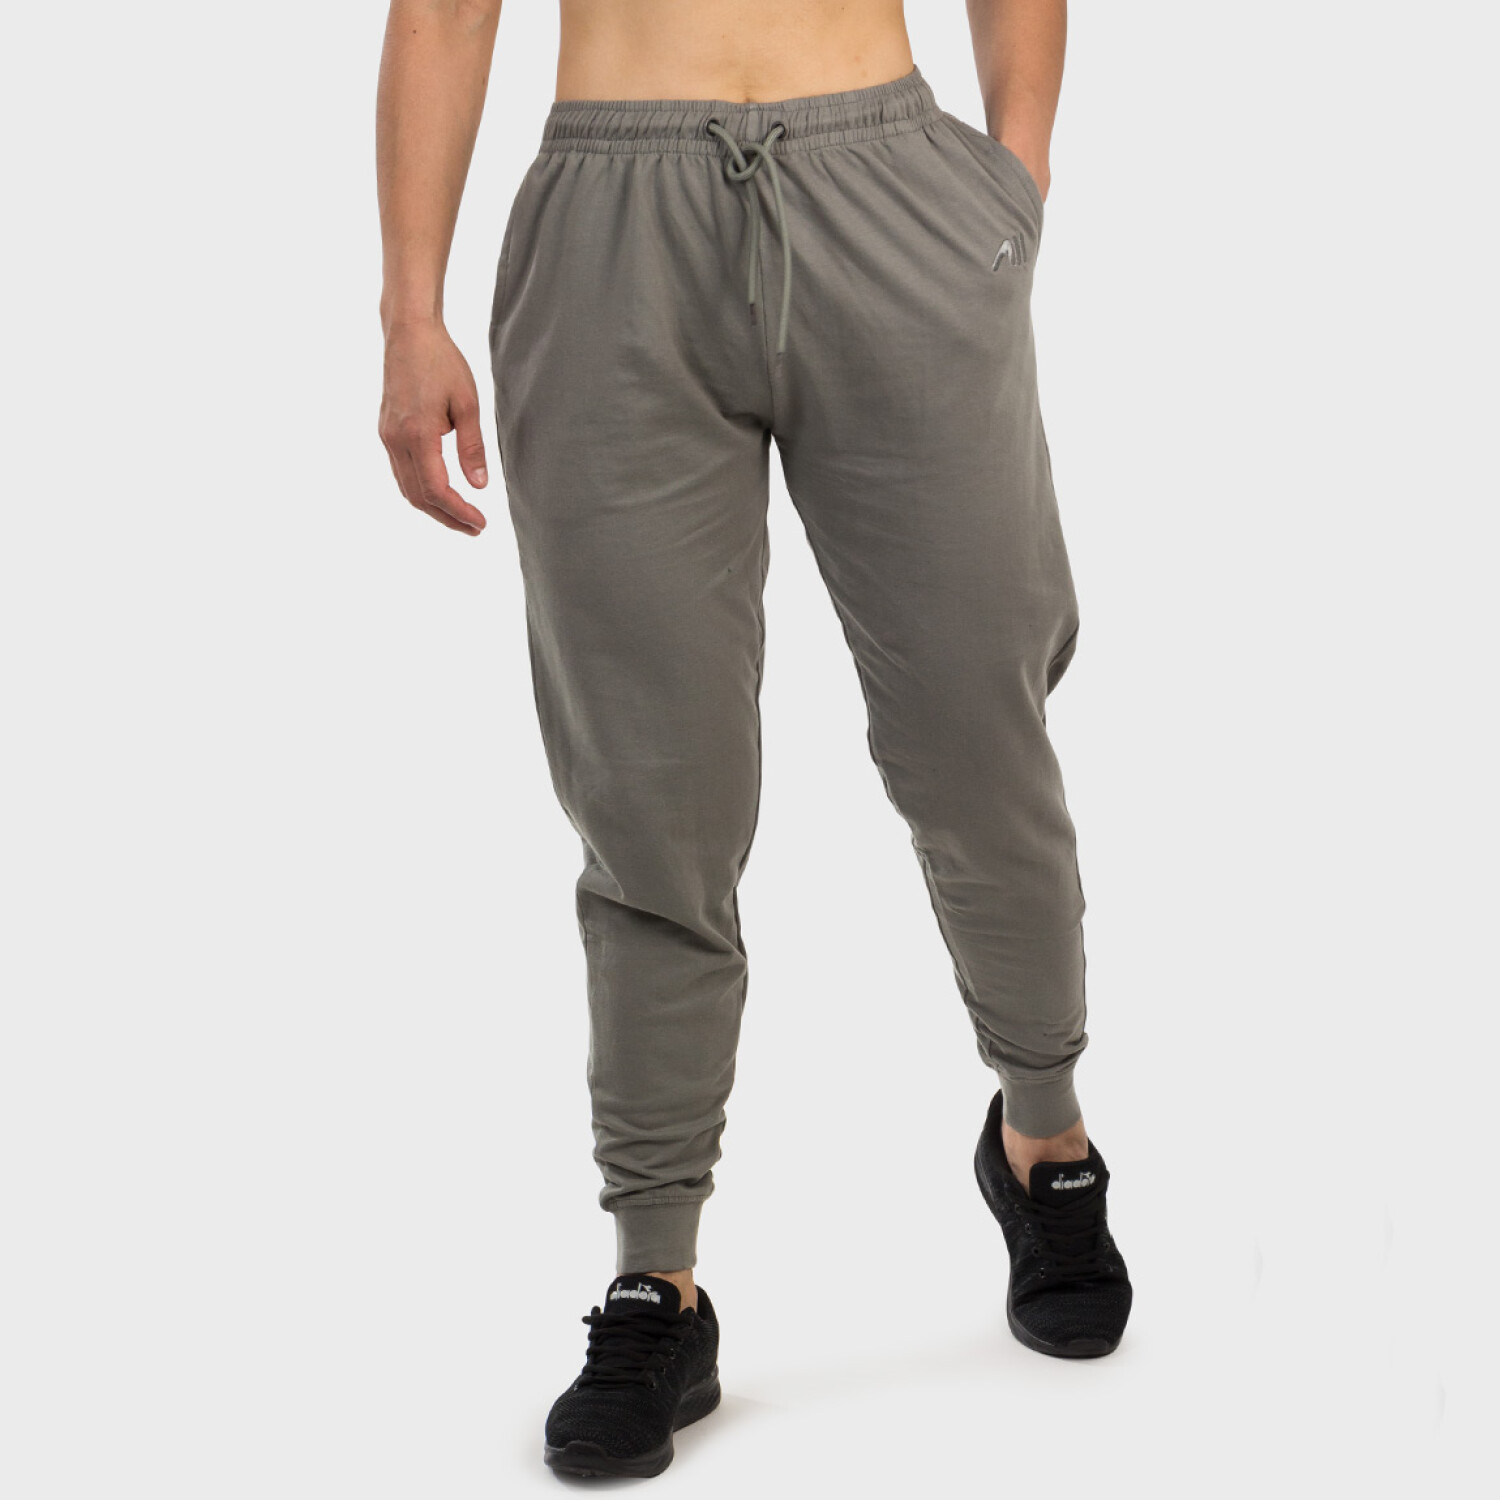 Pants Jogger Shendy Vendy Slim Fit Color Gris Para Mujer